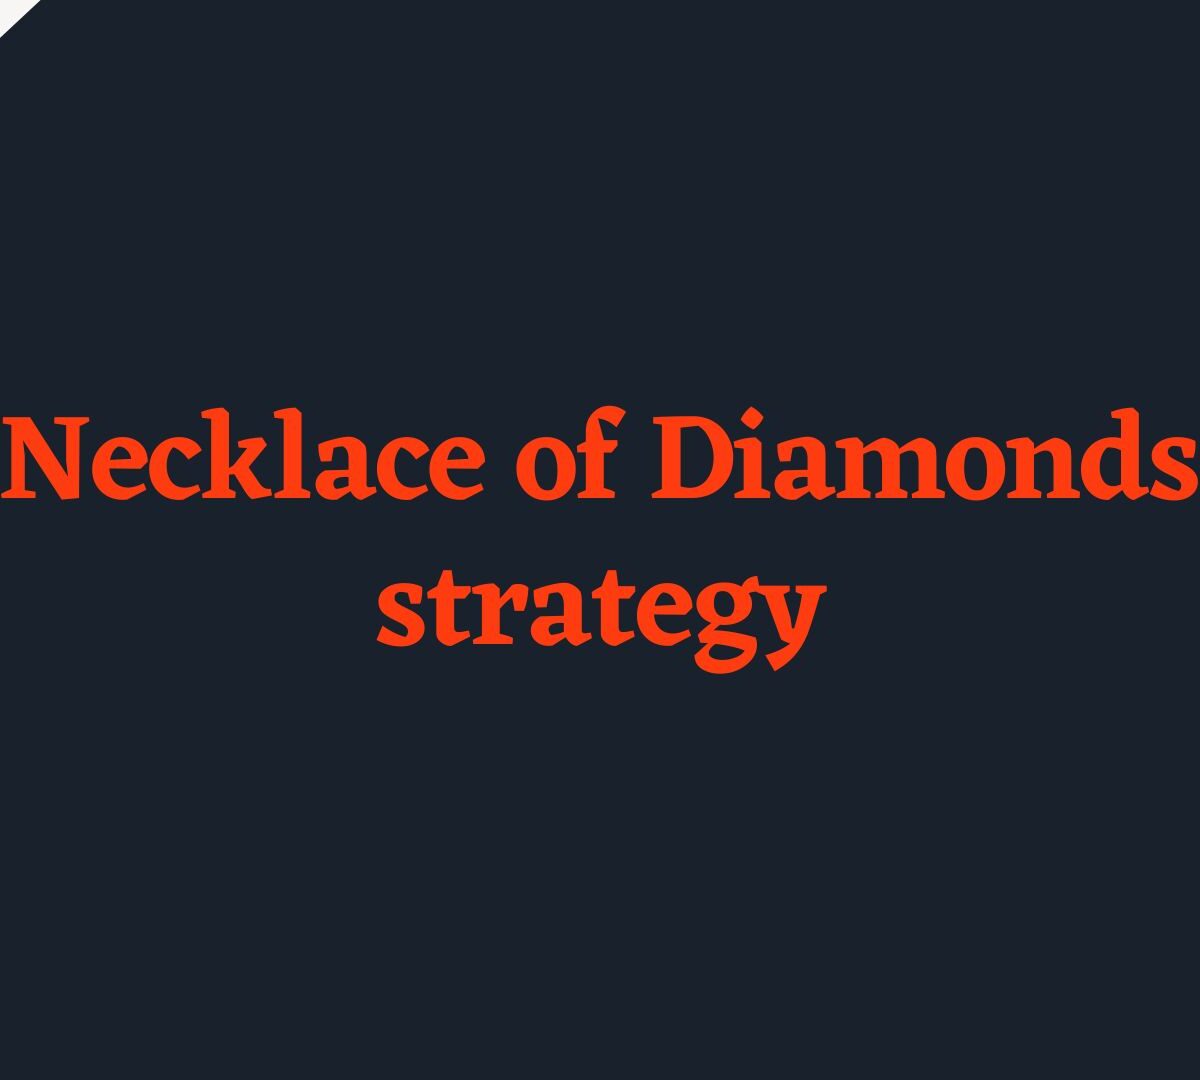 Necklace of diamonds strategy